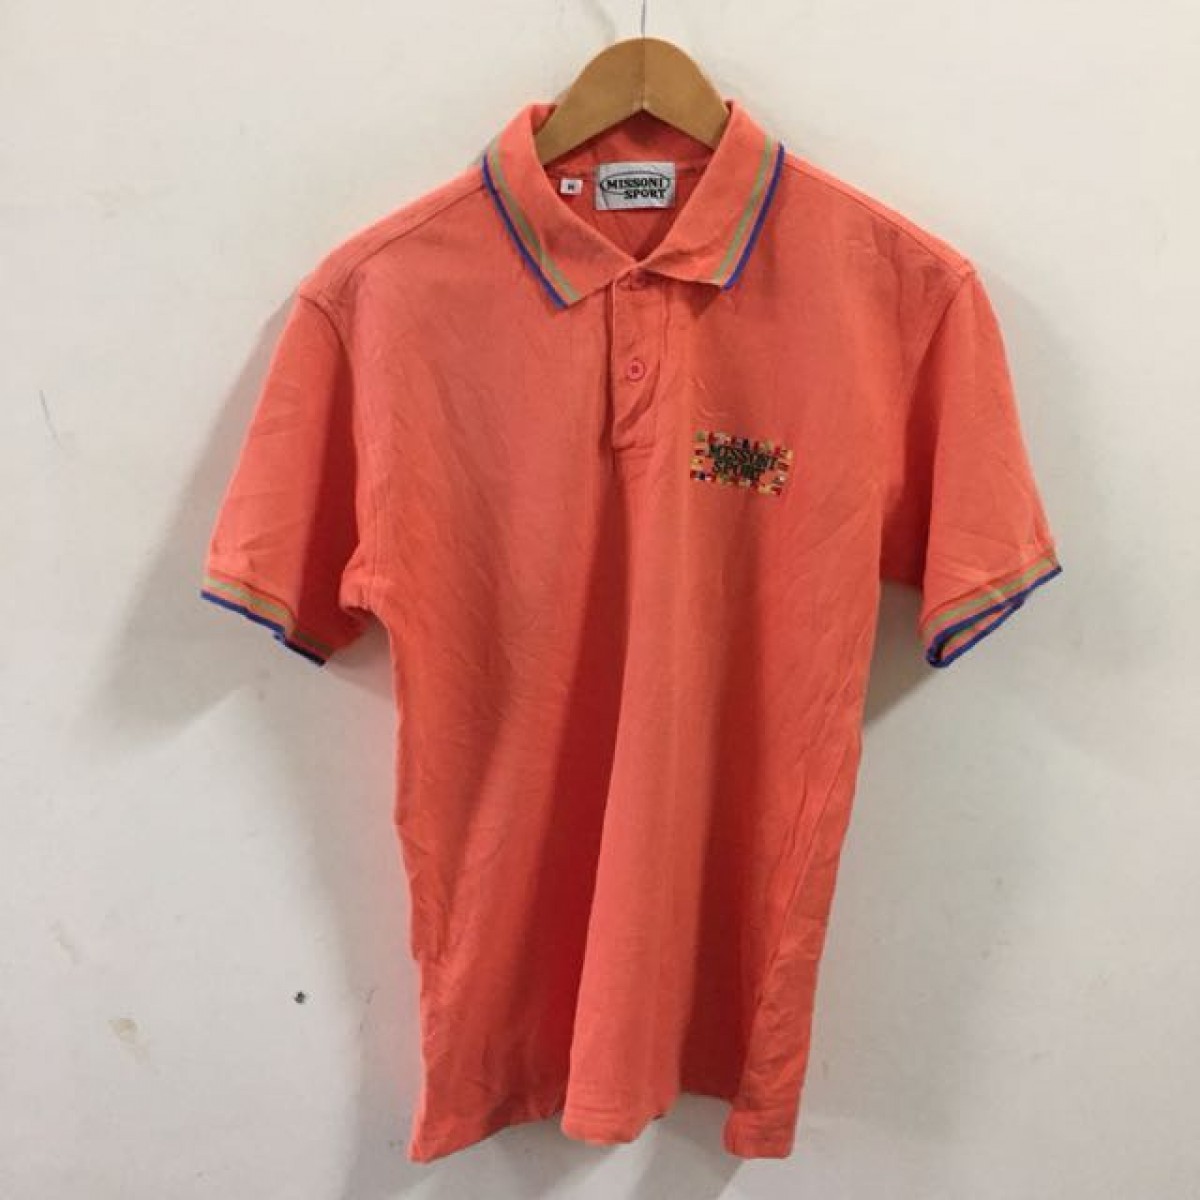 Missoni Sport Polo shirt size m medium orange - 1